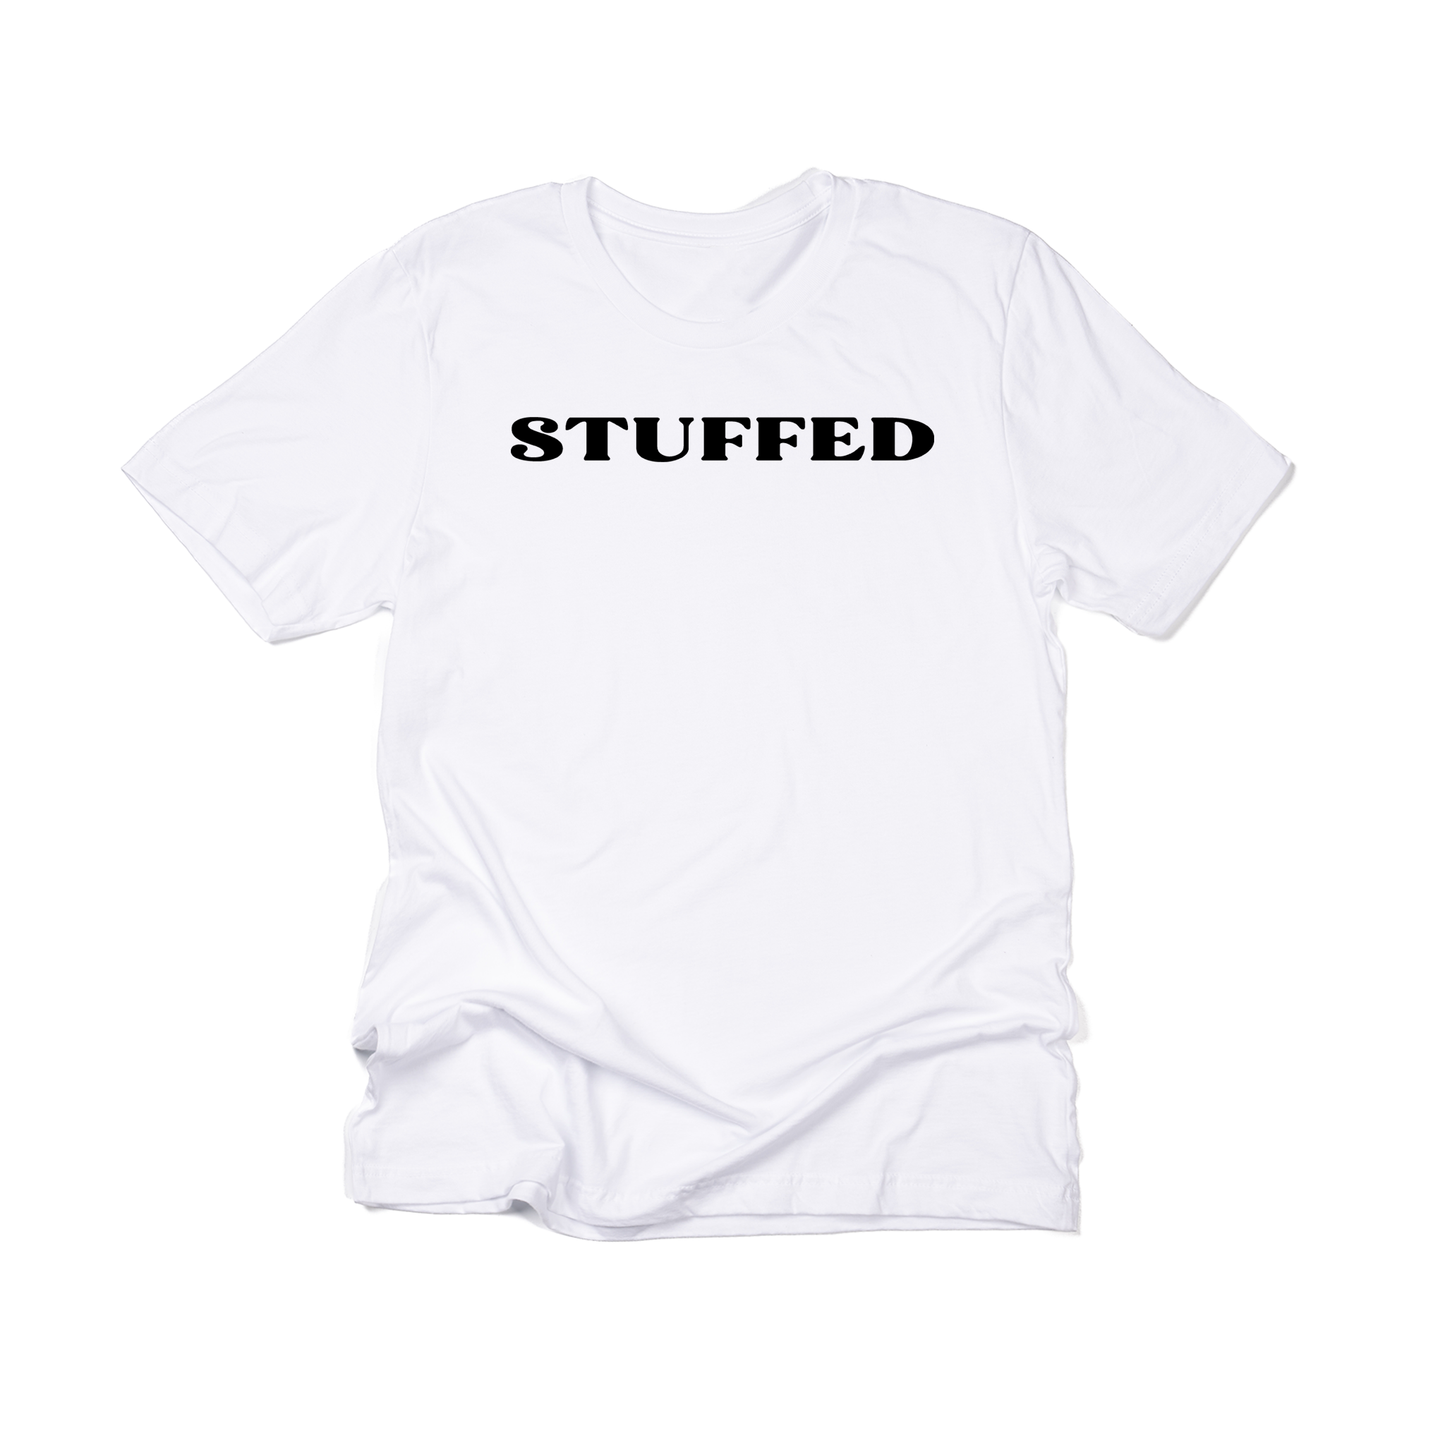 Stuffed (Black) - Tee (White)